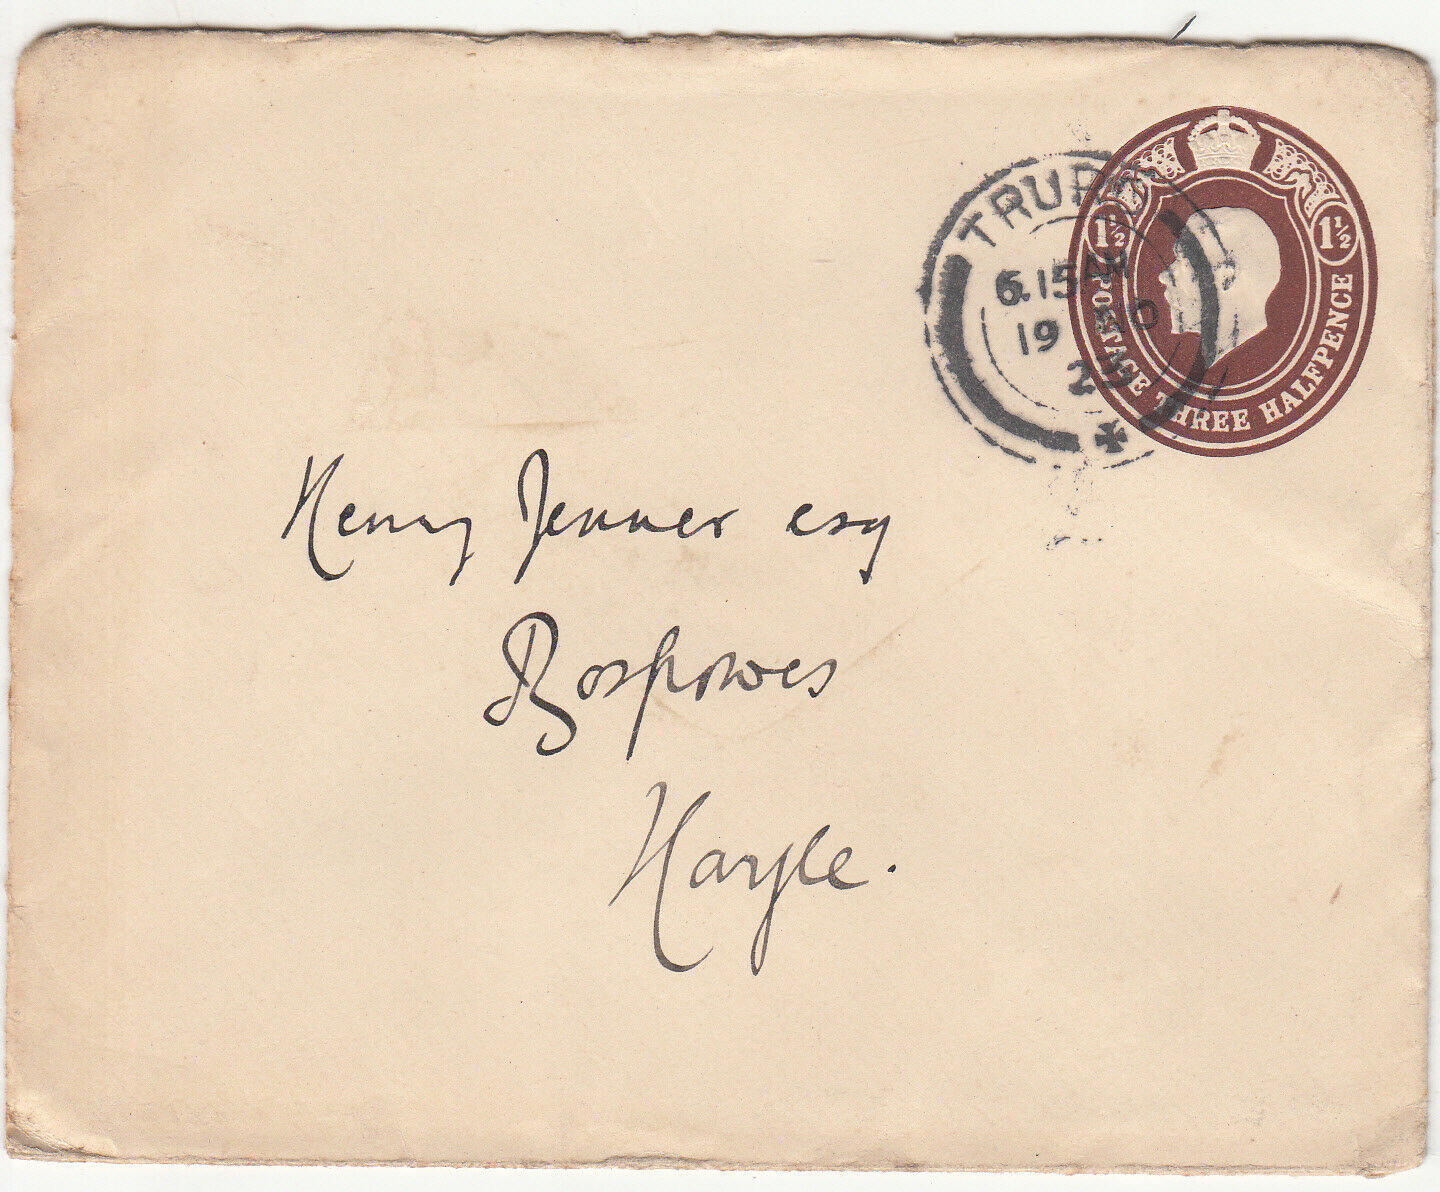 Henry Jenner, Bospowes, Hayle - envelope